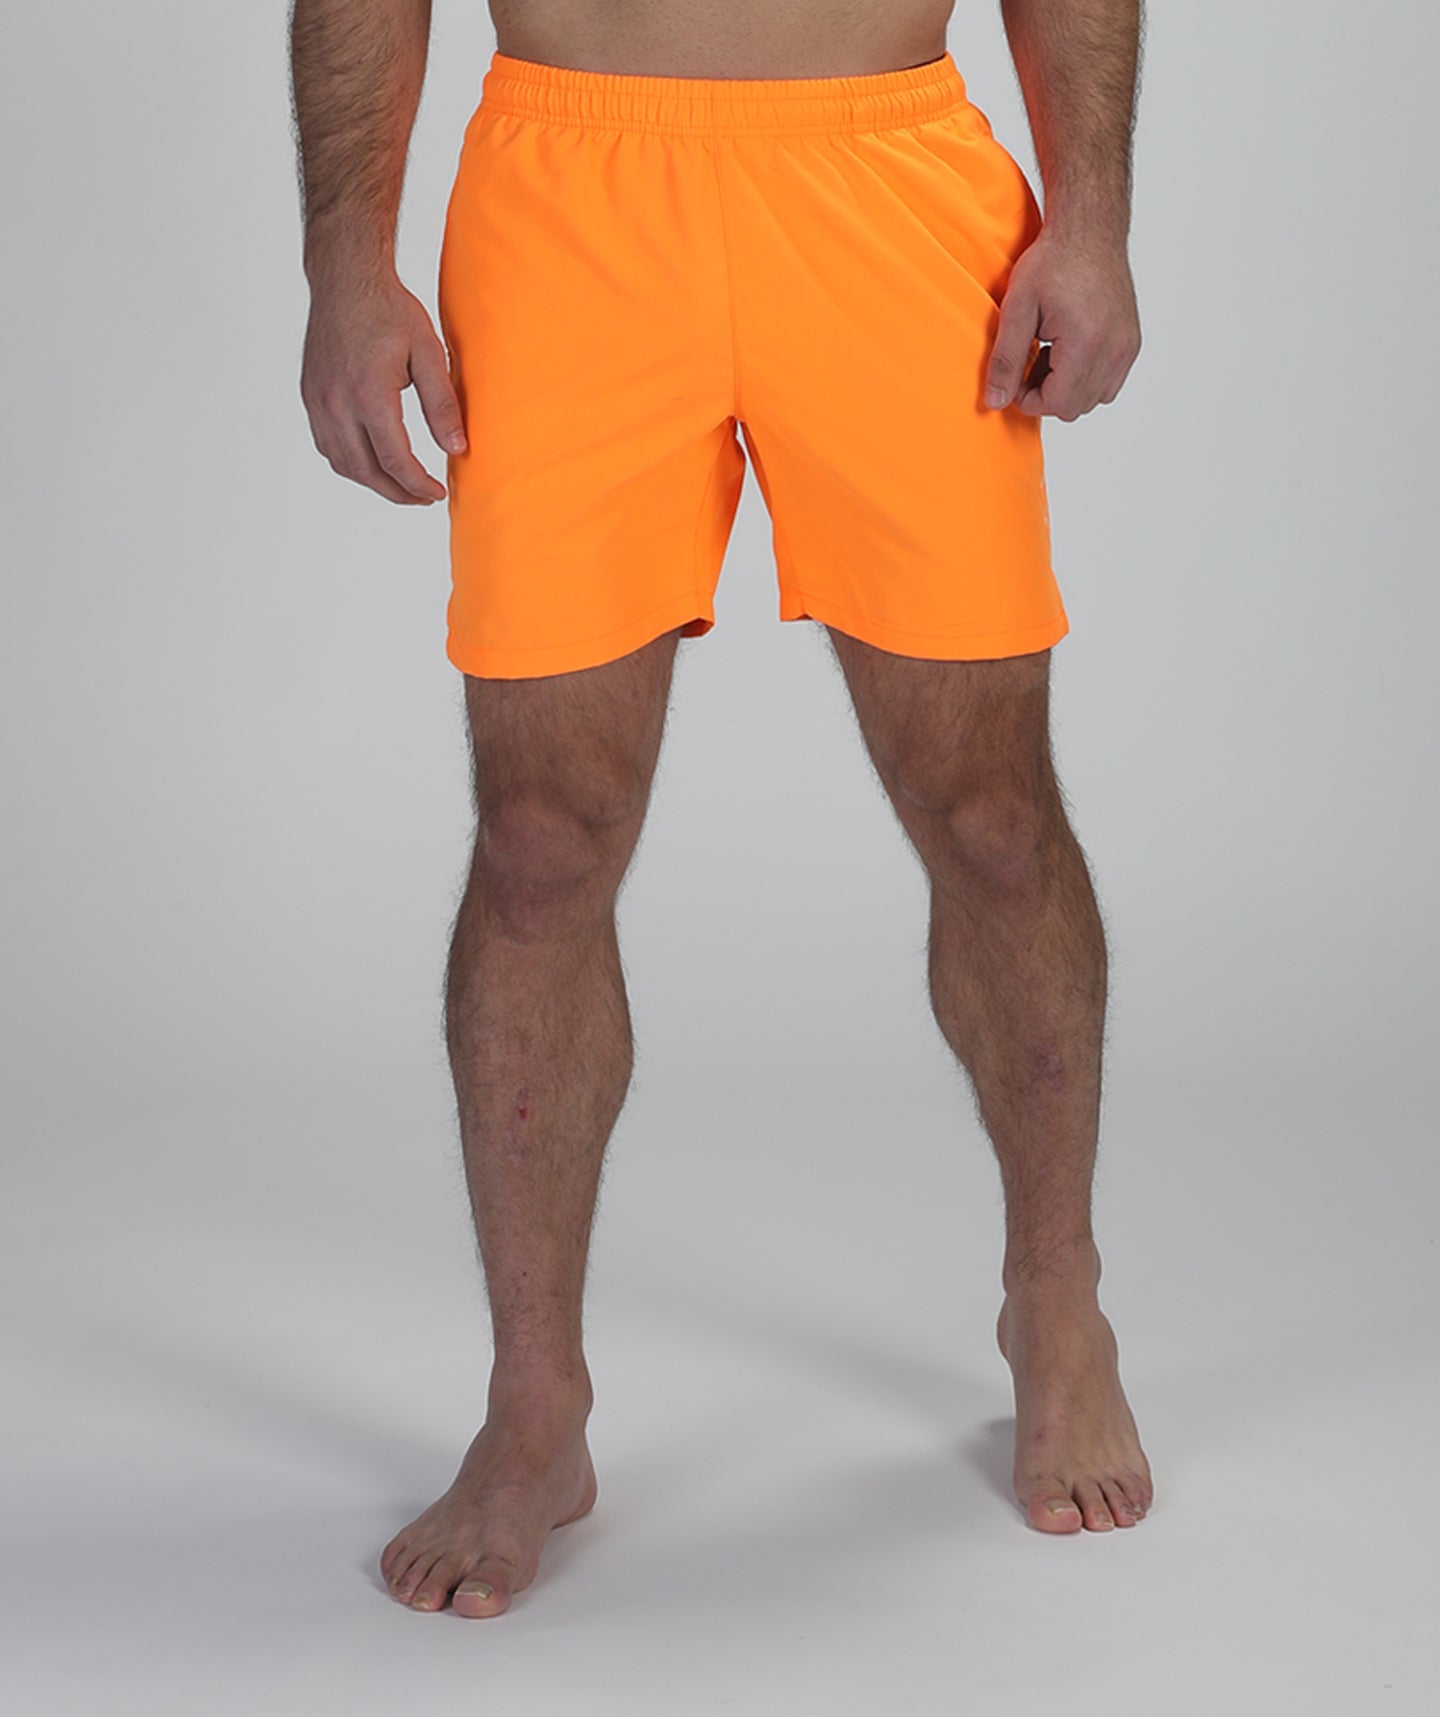 Kg ⚜  
10163-71 ⚜  
D4 ⚜  
PANTONE: No pantone color assigned ⚜  
spacer mesh fabric, 100 %polyester, 150 cm, neon orange